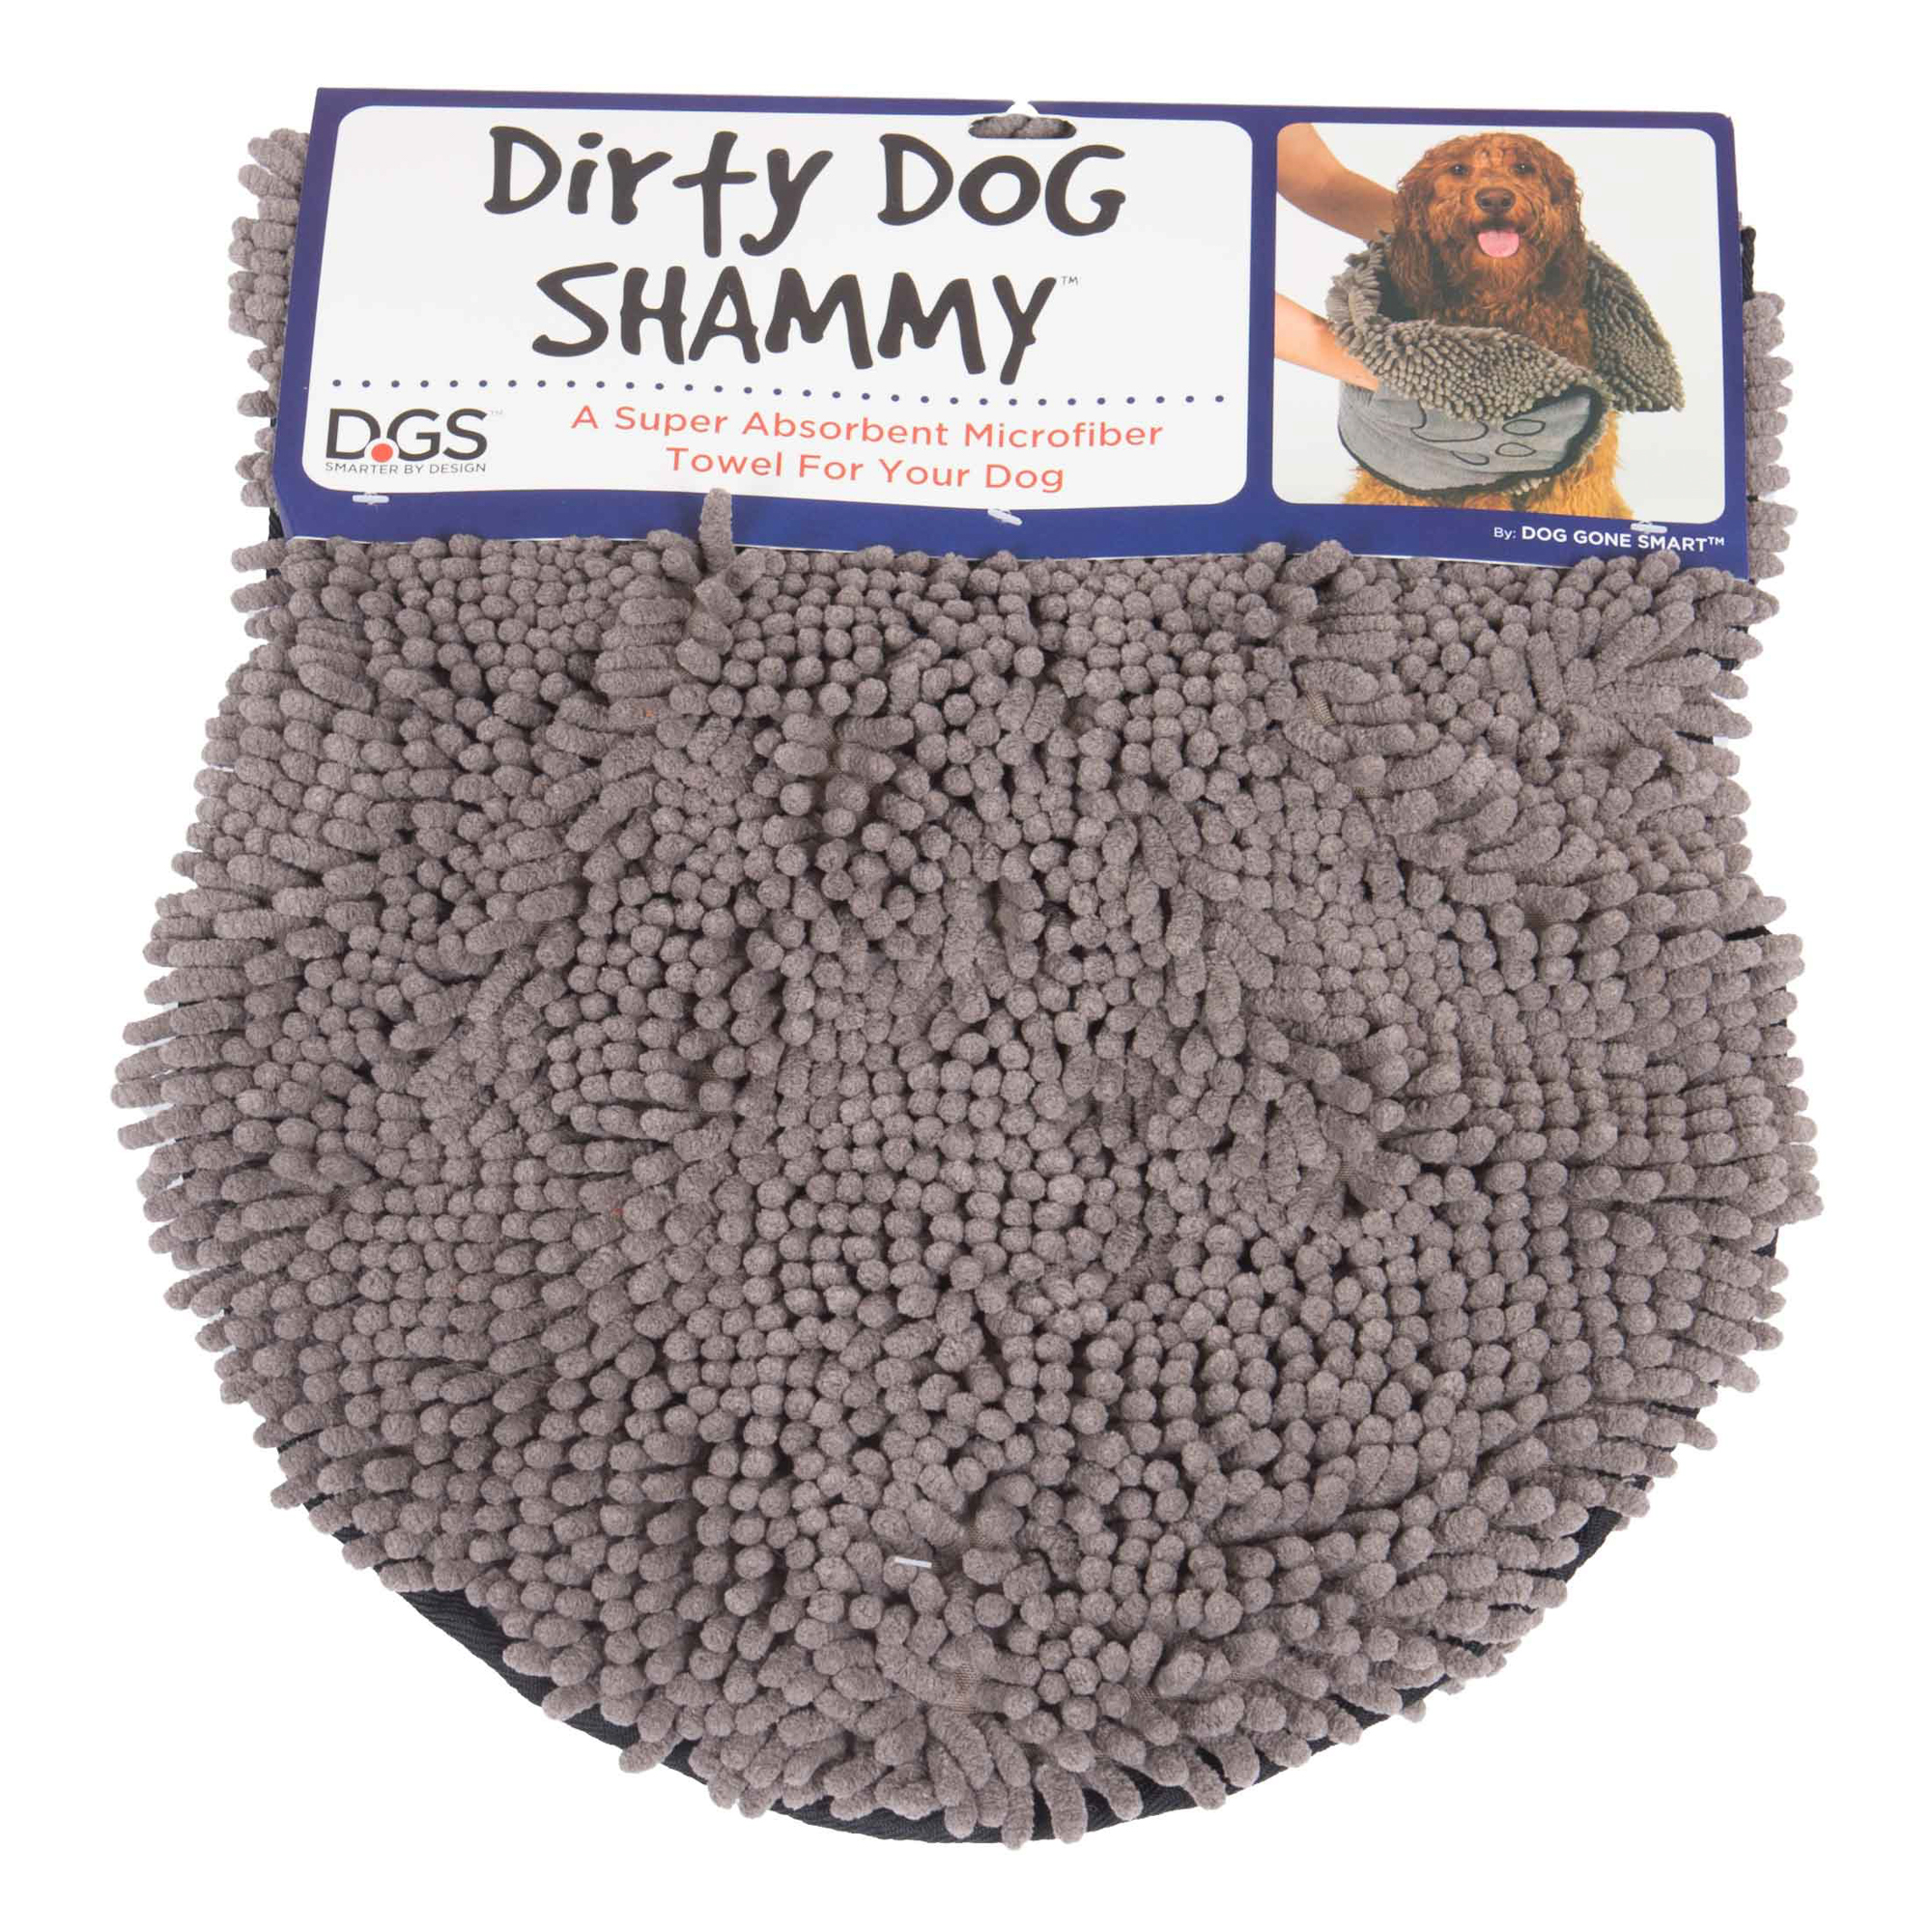 Dog Gone Smart Dirty Dog Shammy Towel Usage